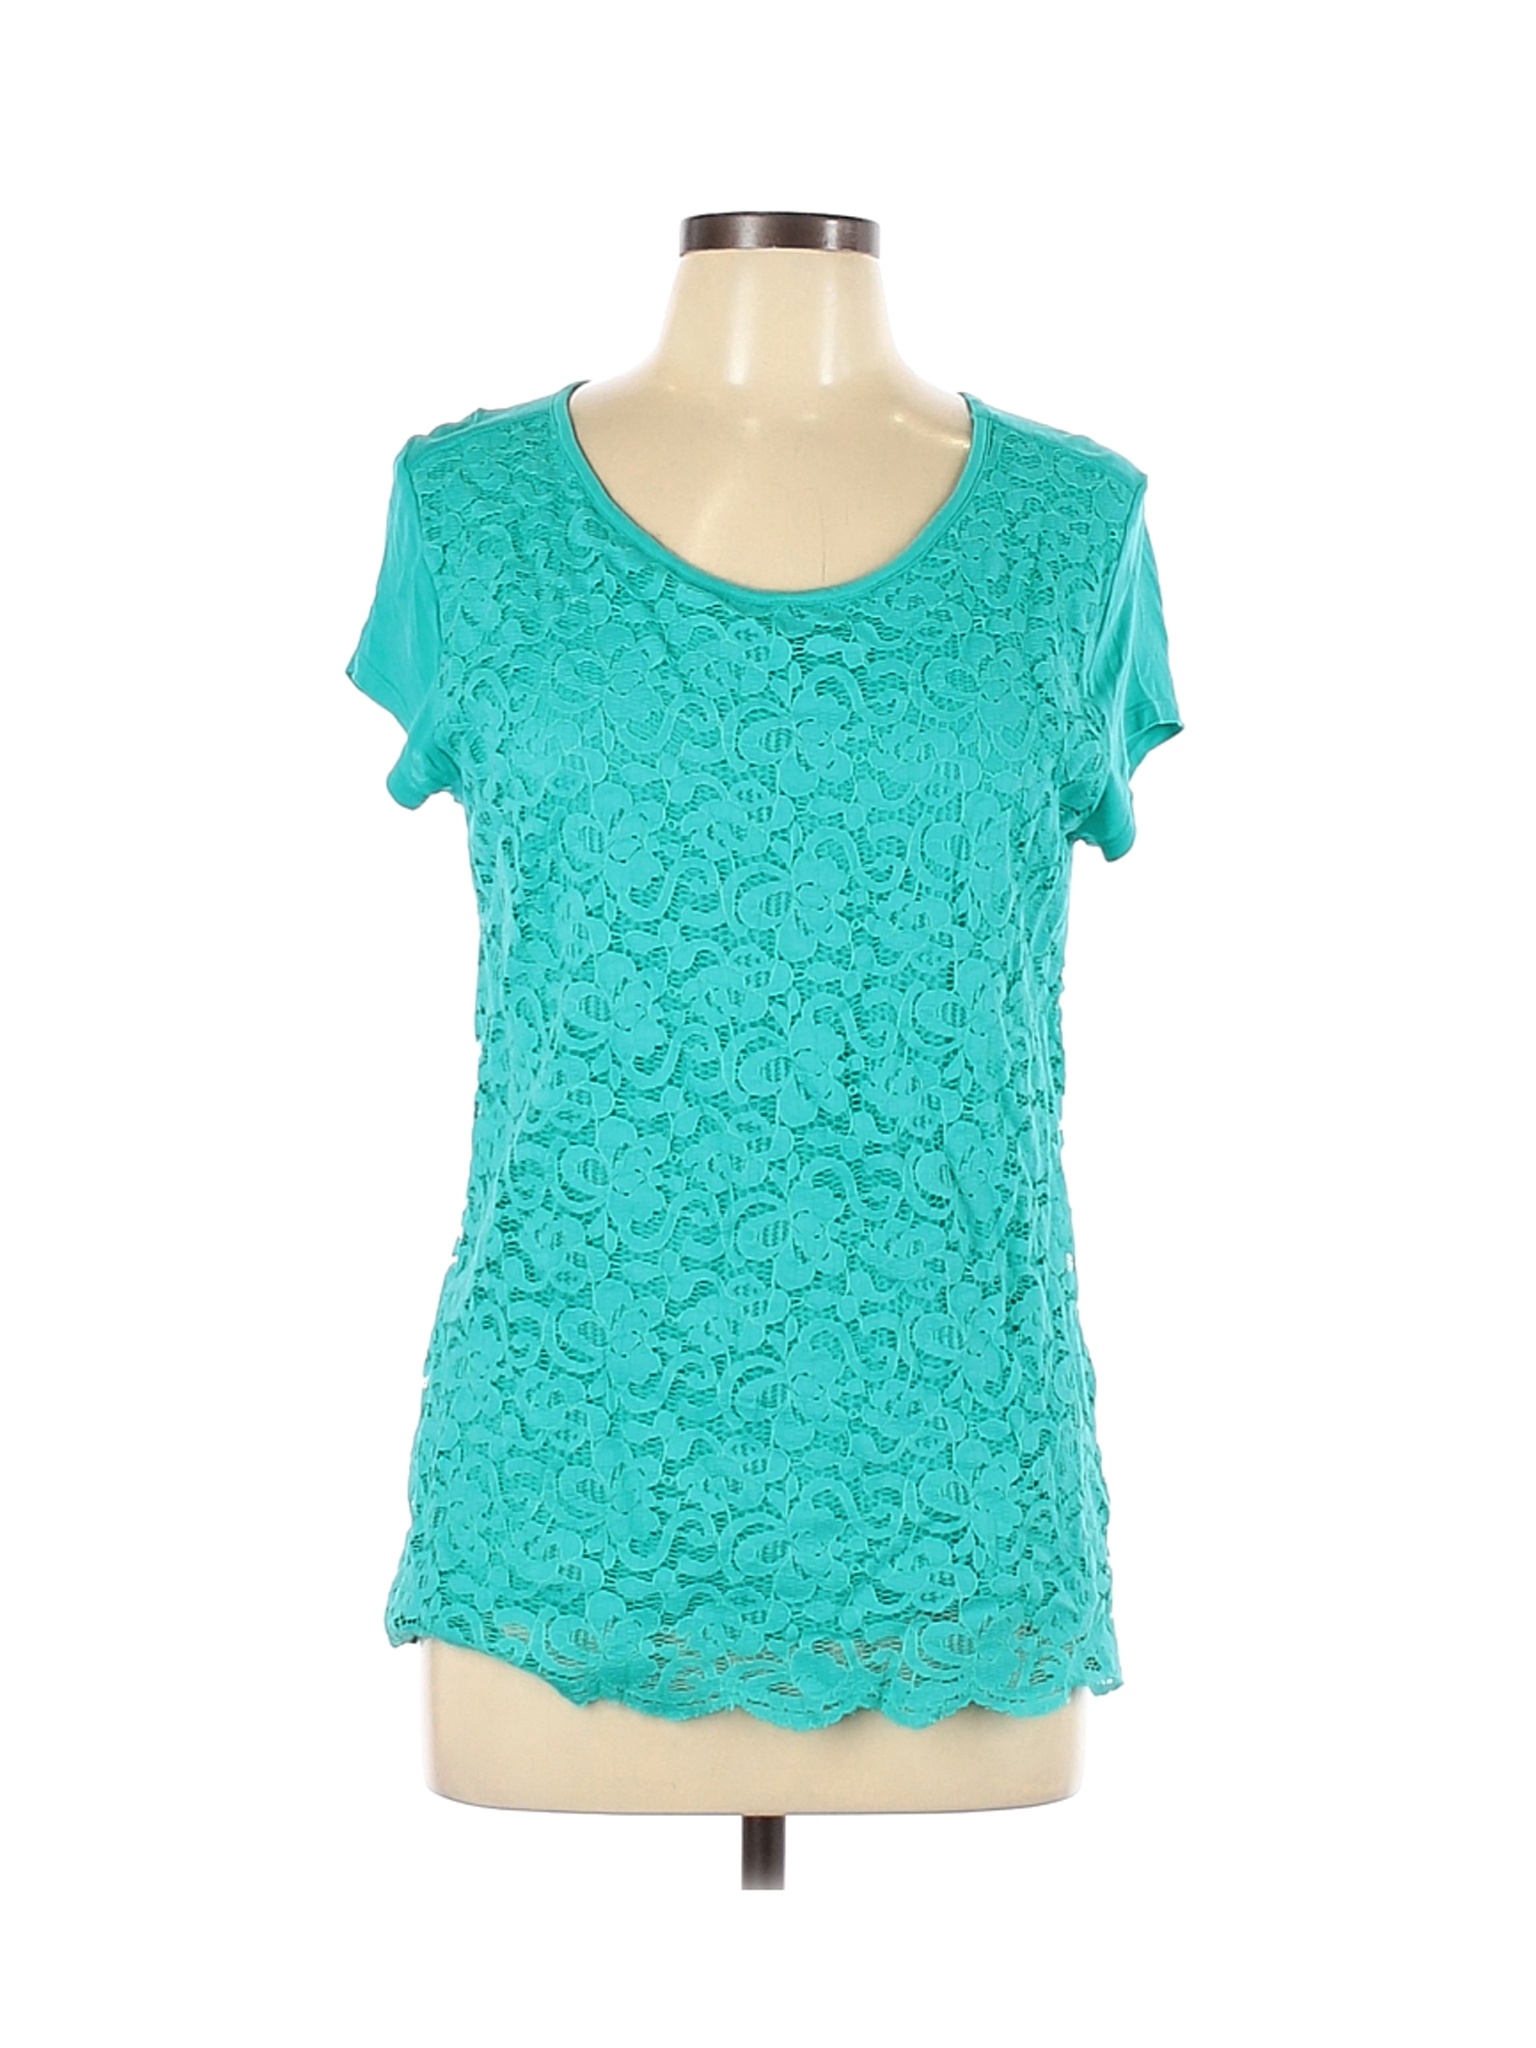 New York & Company Women Blue Short Sleeve Top L | eBay